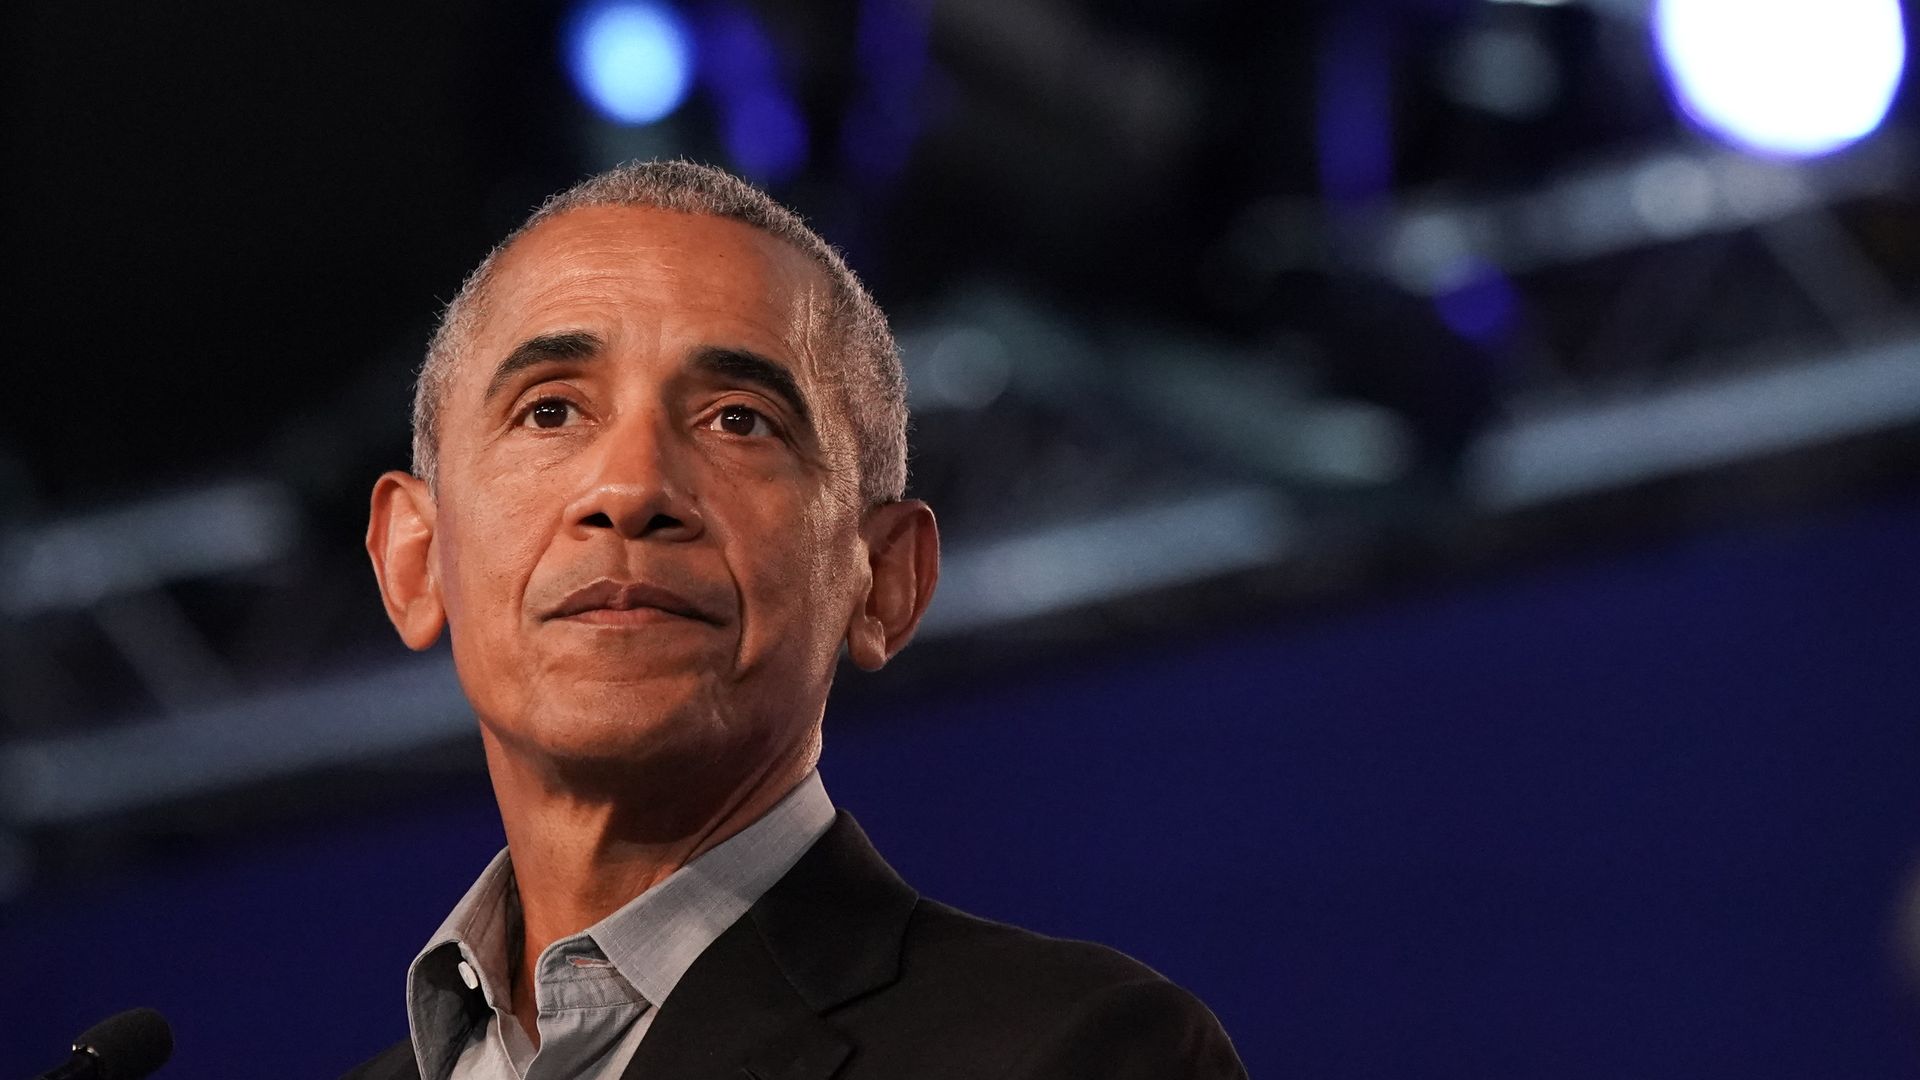 Photo of Barack Obama looking pensive